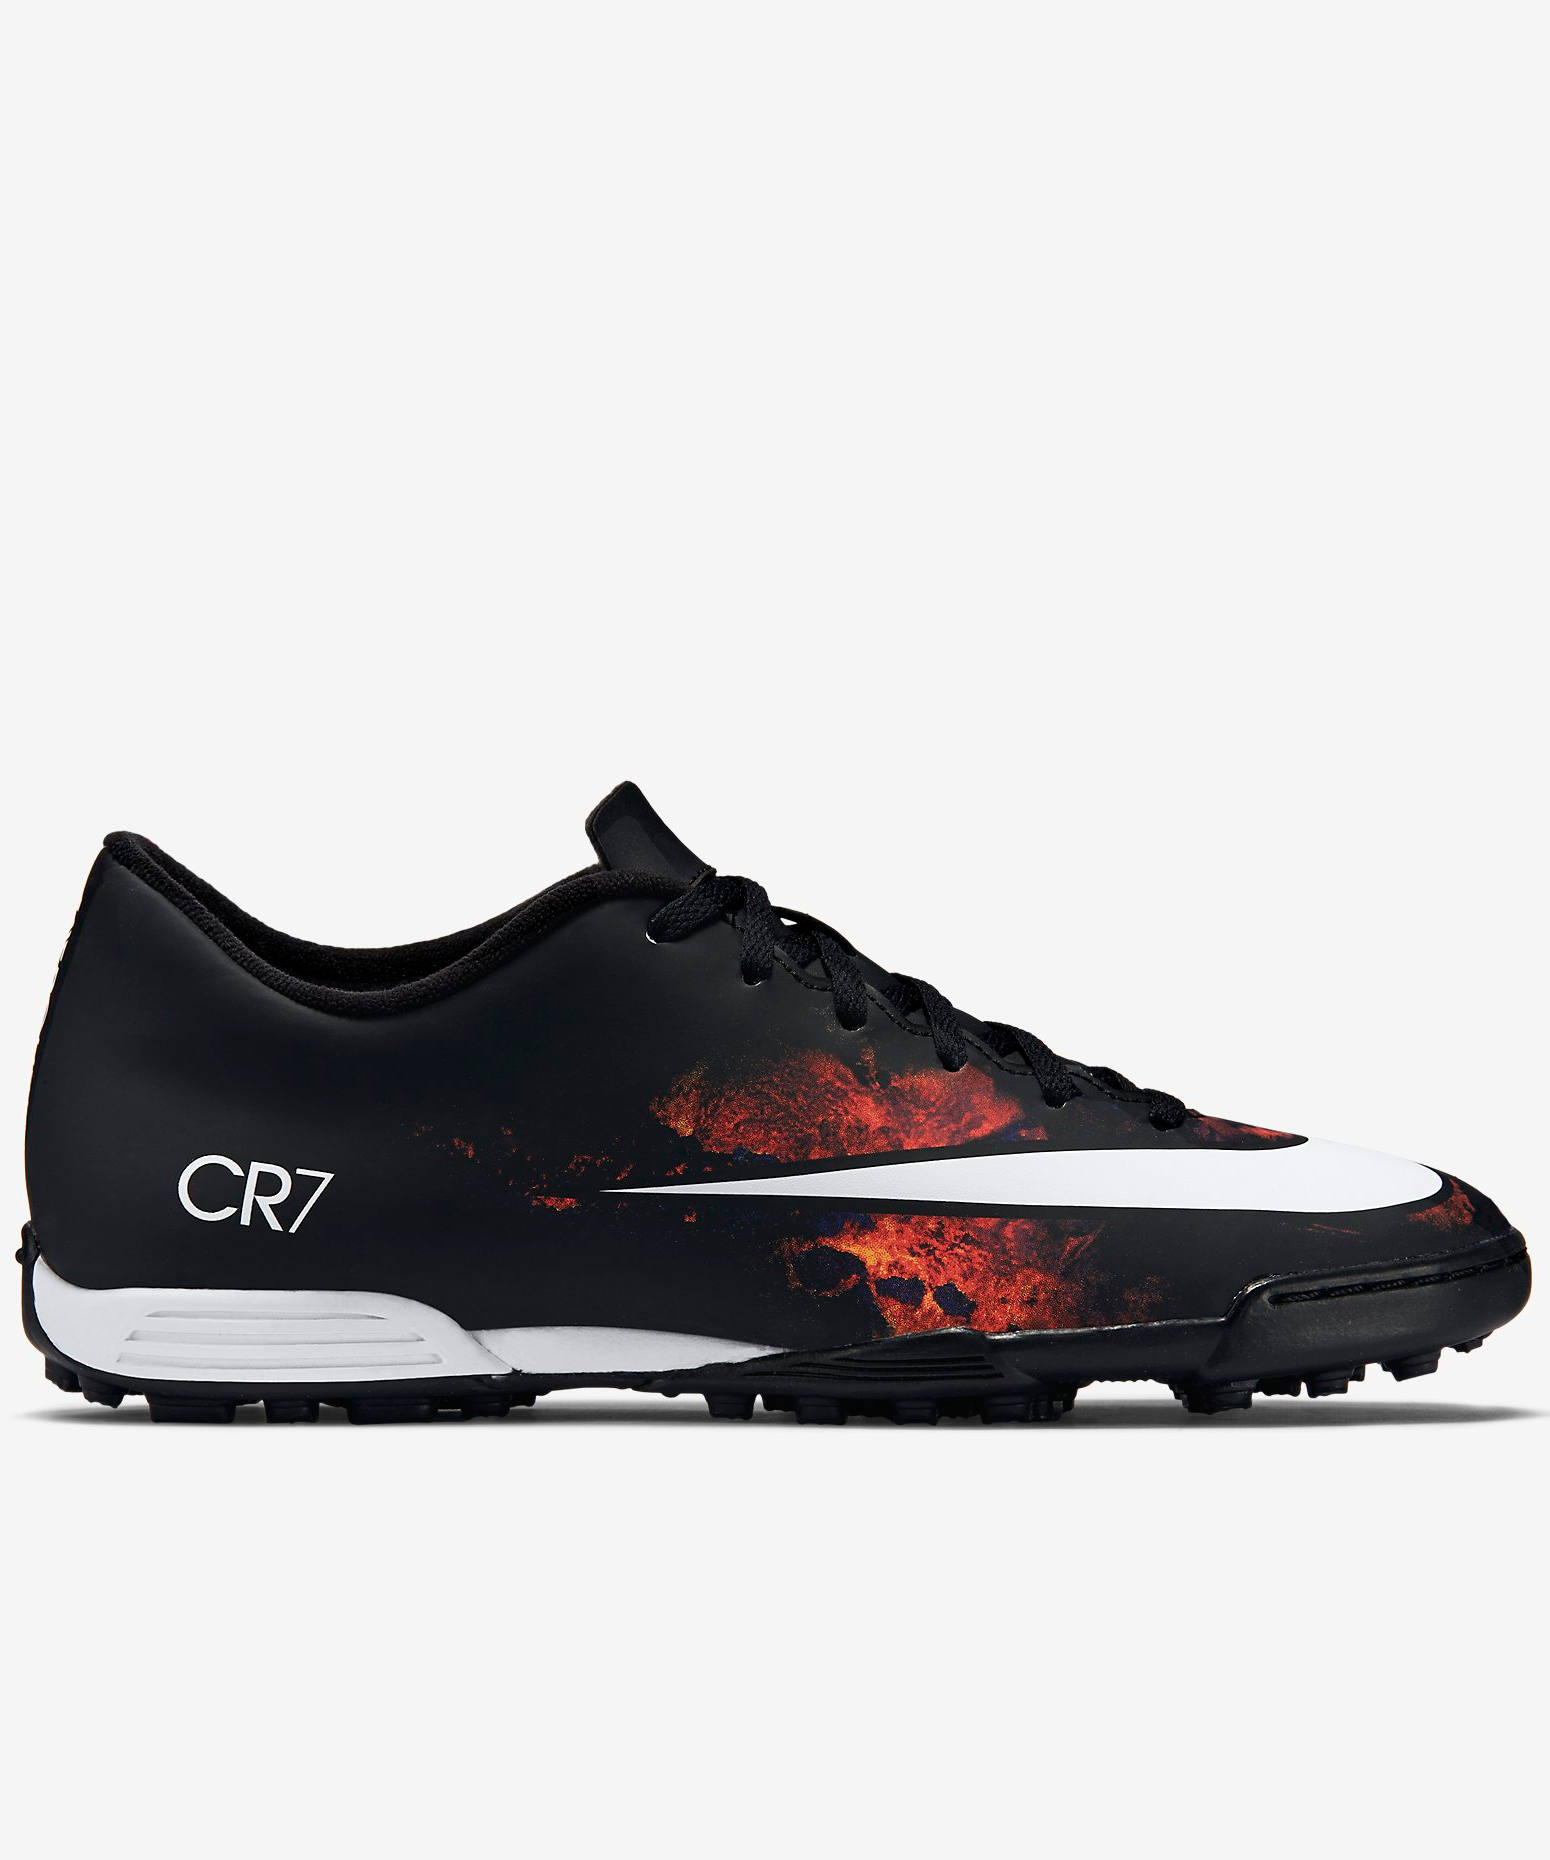 Football boots shoes Nike Cleats Mercurial VORTEX II CR7 Turf Trainers | eBay